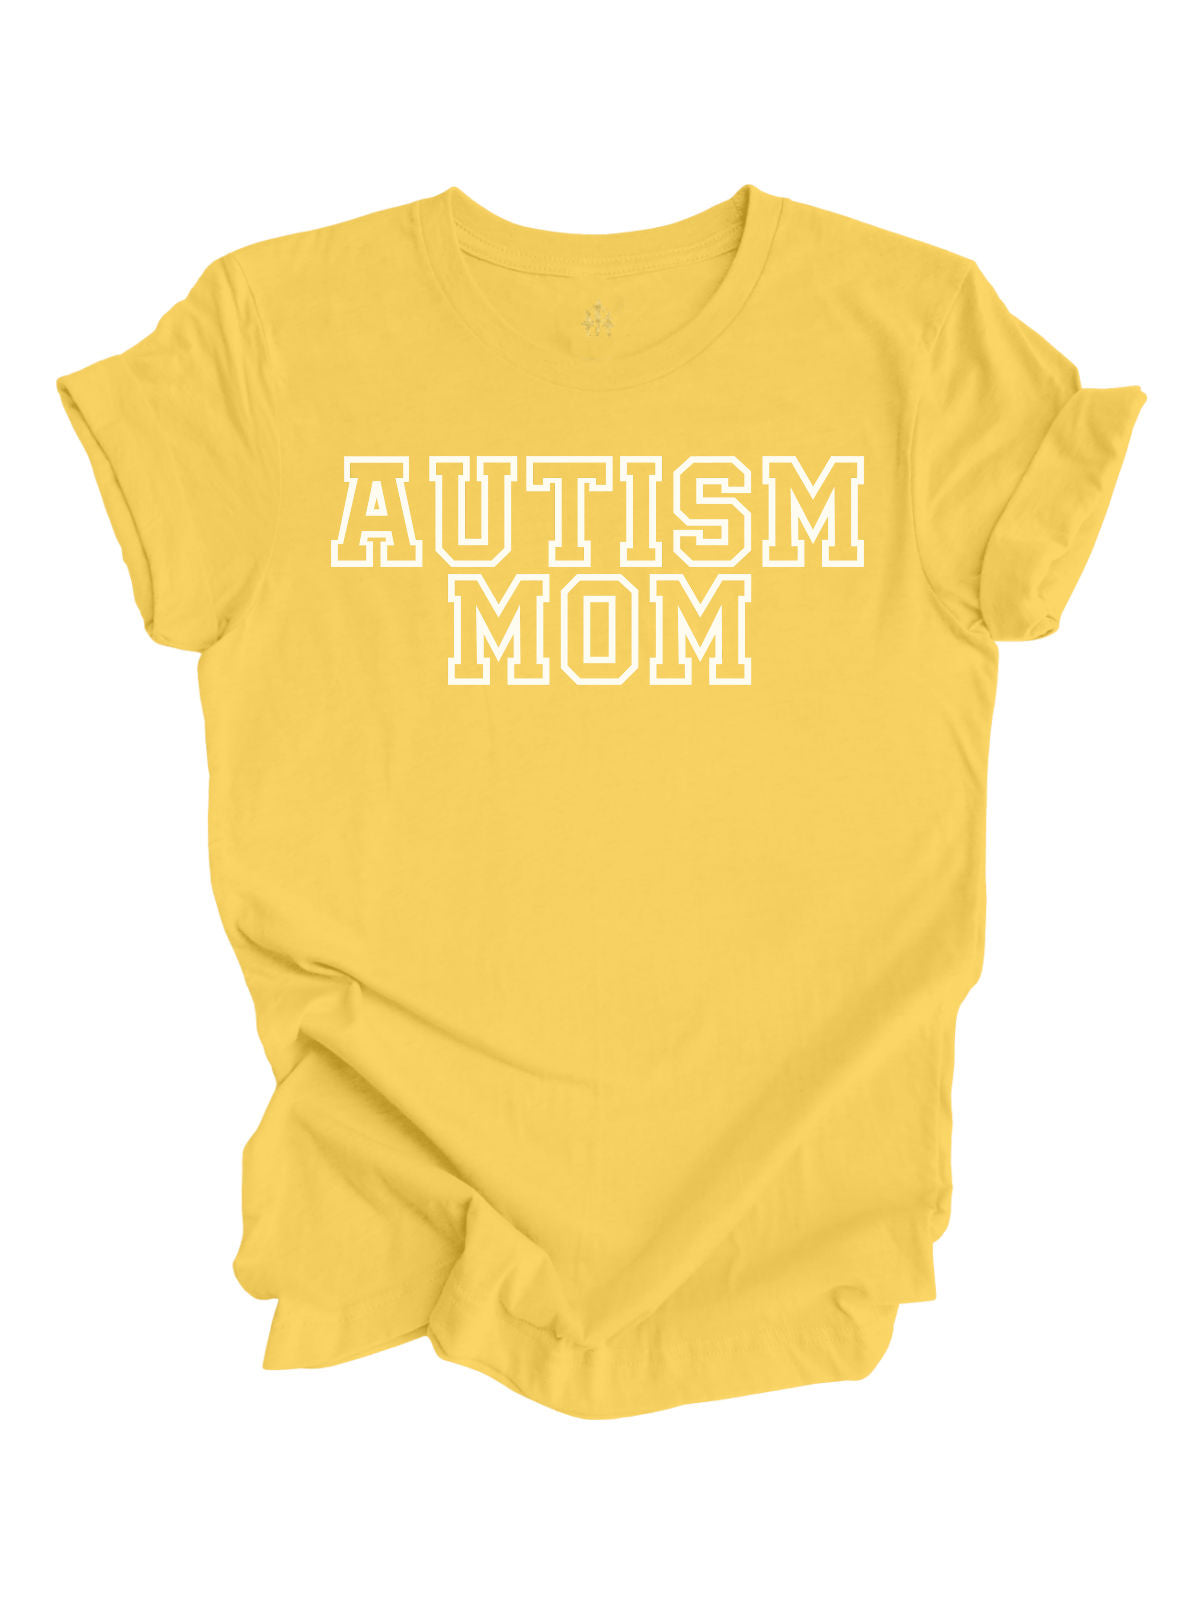 Autism Mom Shirt - Yellow